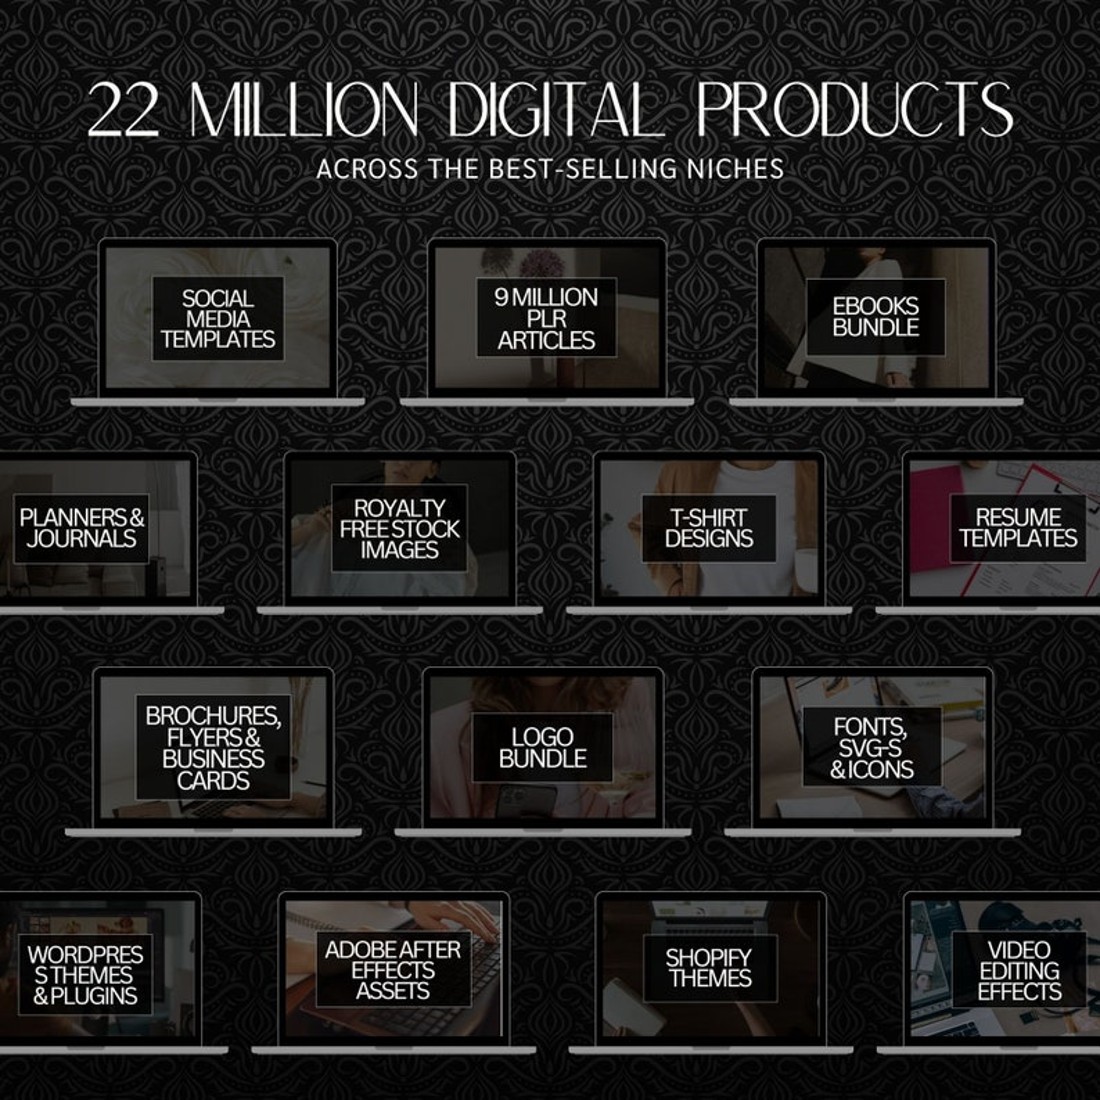 22Million Digital Products to Sell | PLR Digital Products | Digital Products Bundle Resell preview image.